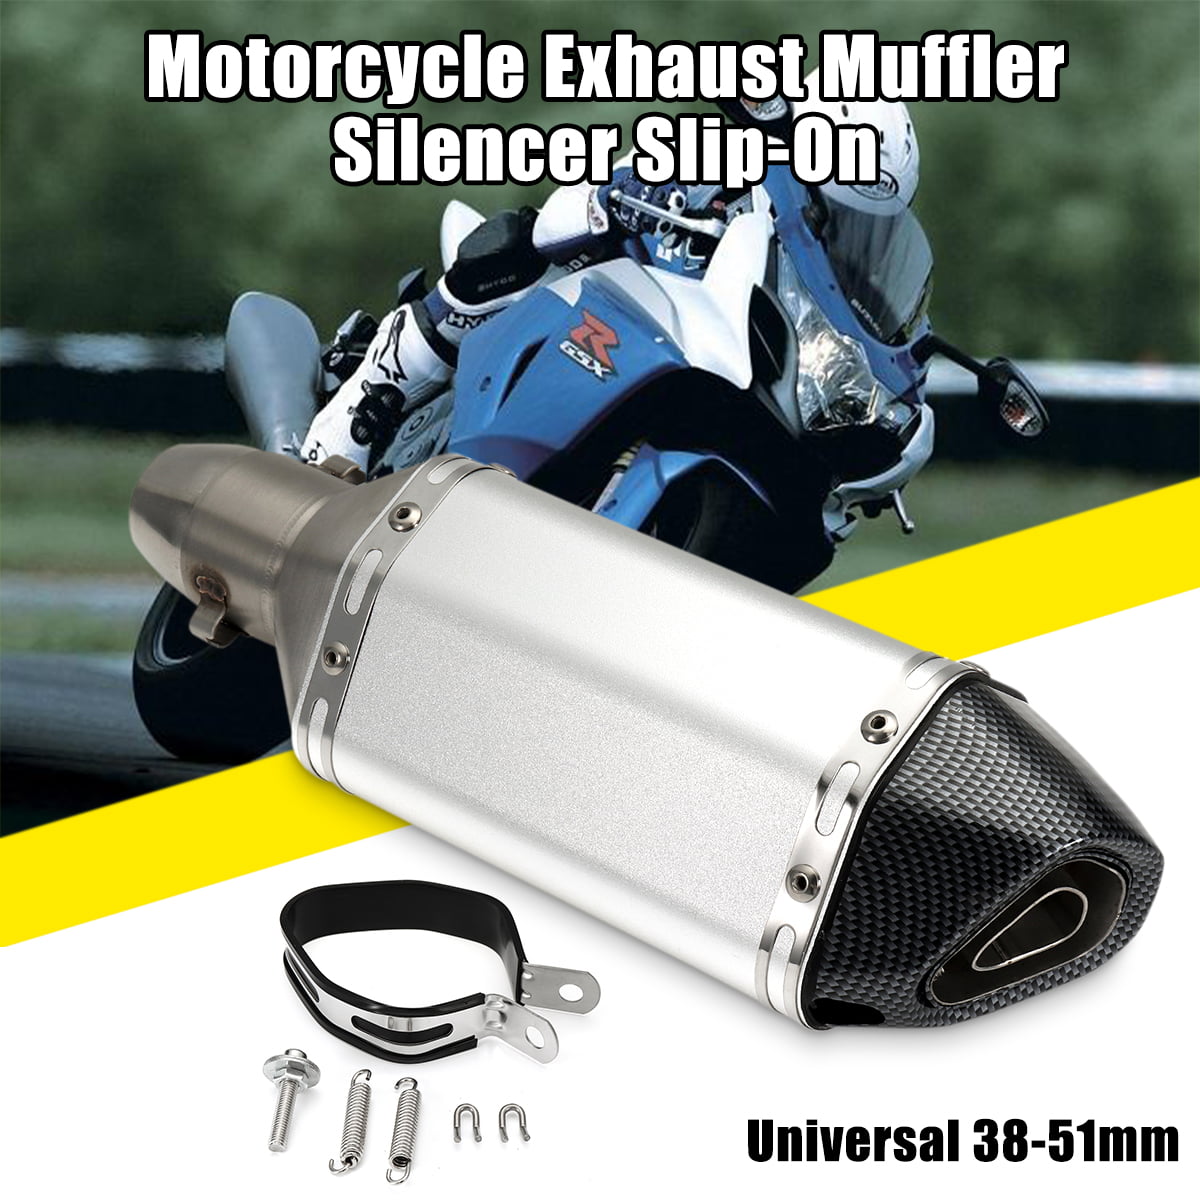 New Universal Motorcycle Short Exhaust Muffler Silencer Slip On W/DB Killer 51mm